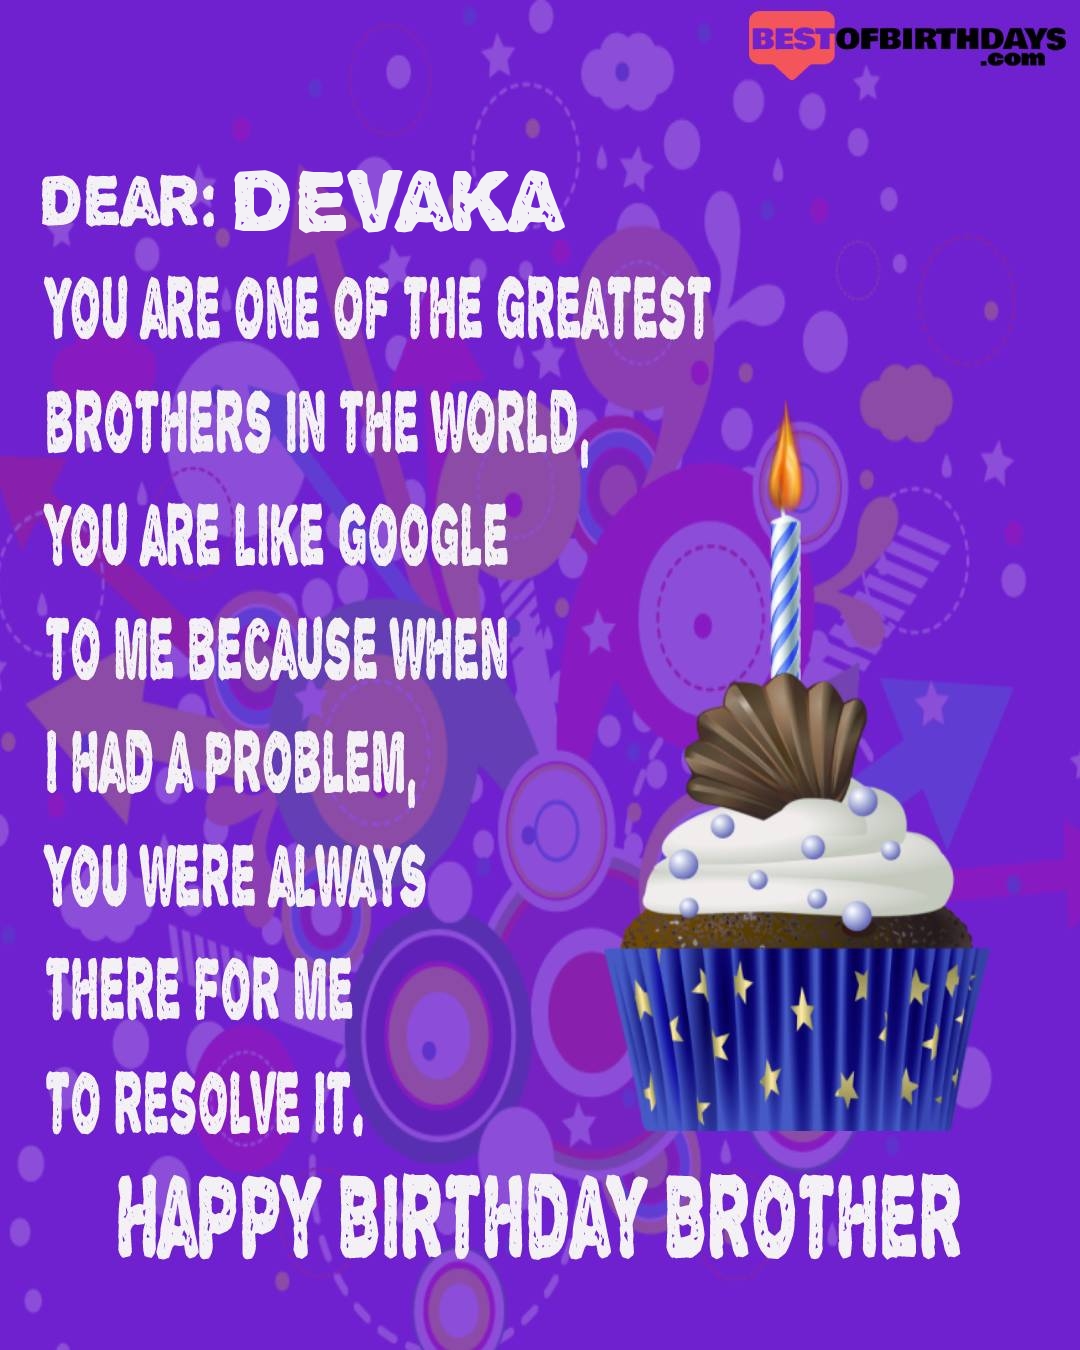 Happy birthday devaka bhai brother bro